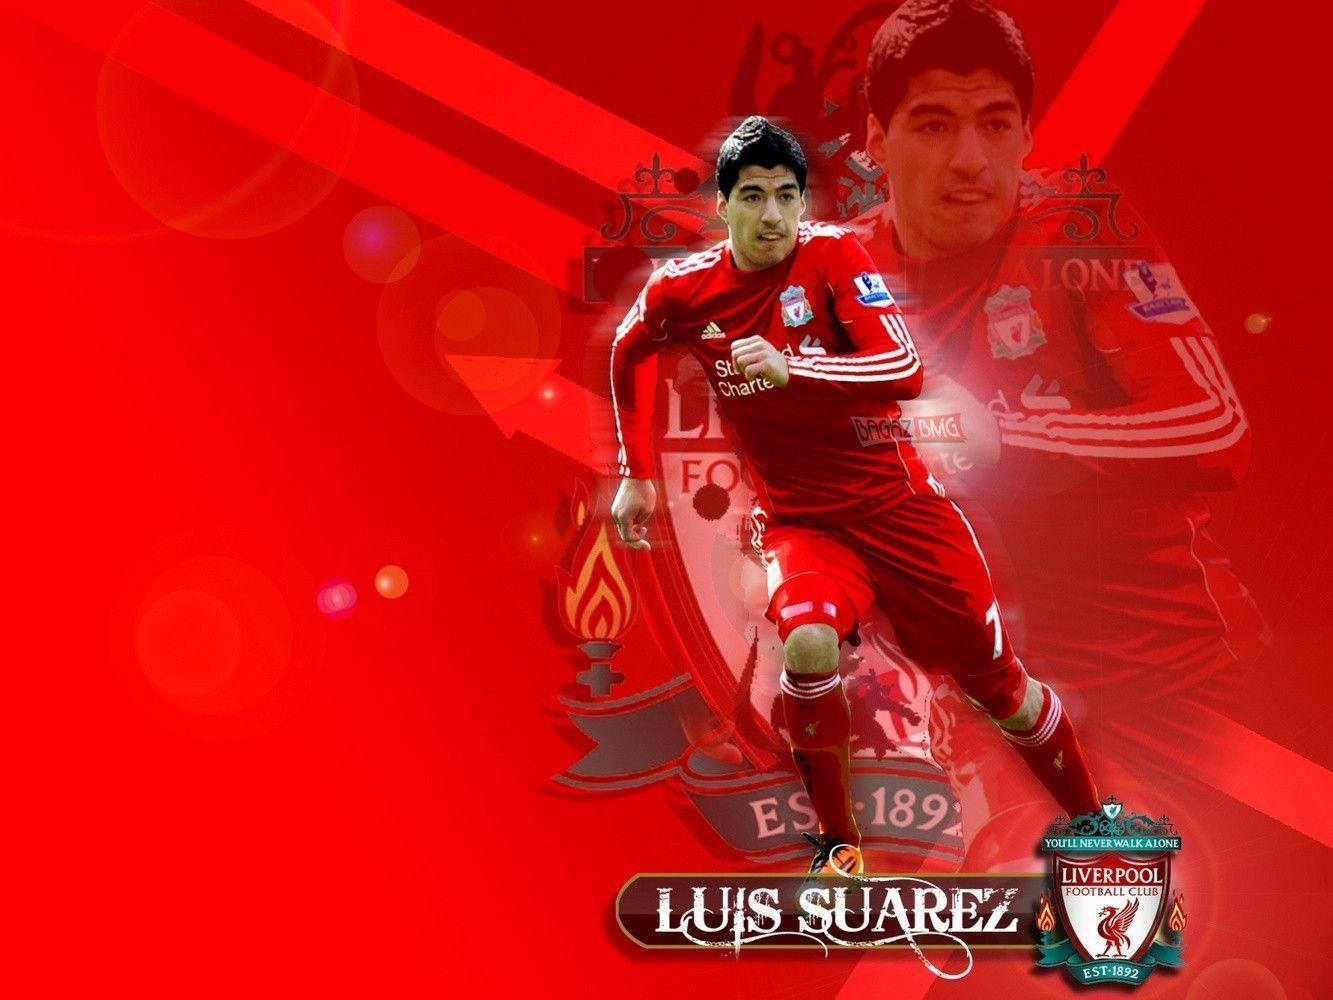 Luis Suarez Wallpaper. Football Wallpaper Football Players